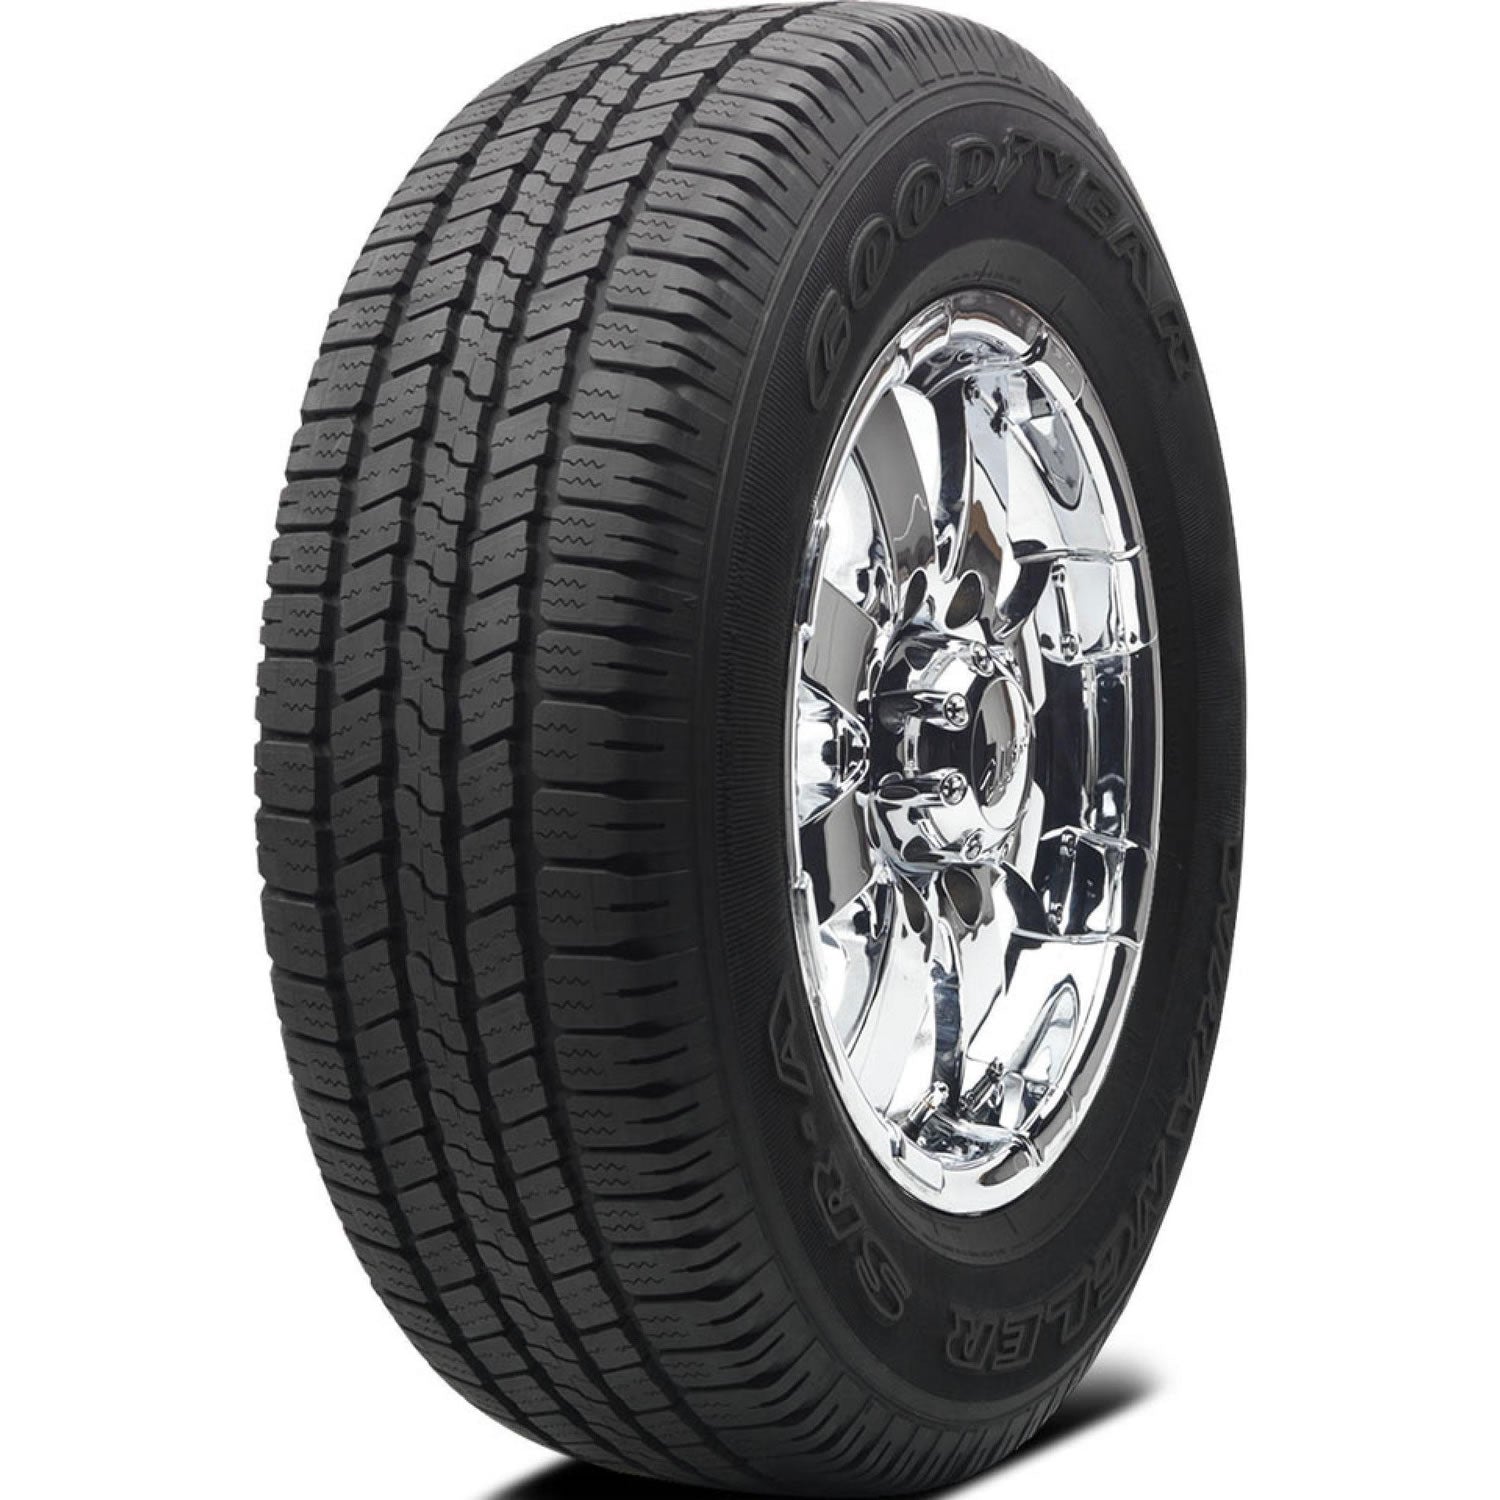 GOODYEAR WRANGLER SR-A P255/75R17 (32.1X10R 17) Tires